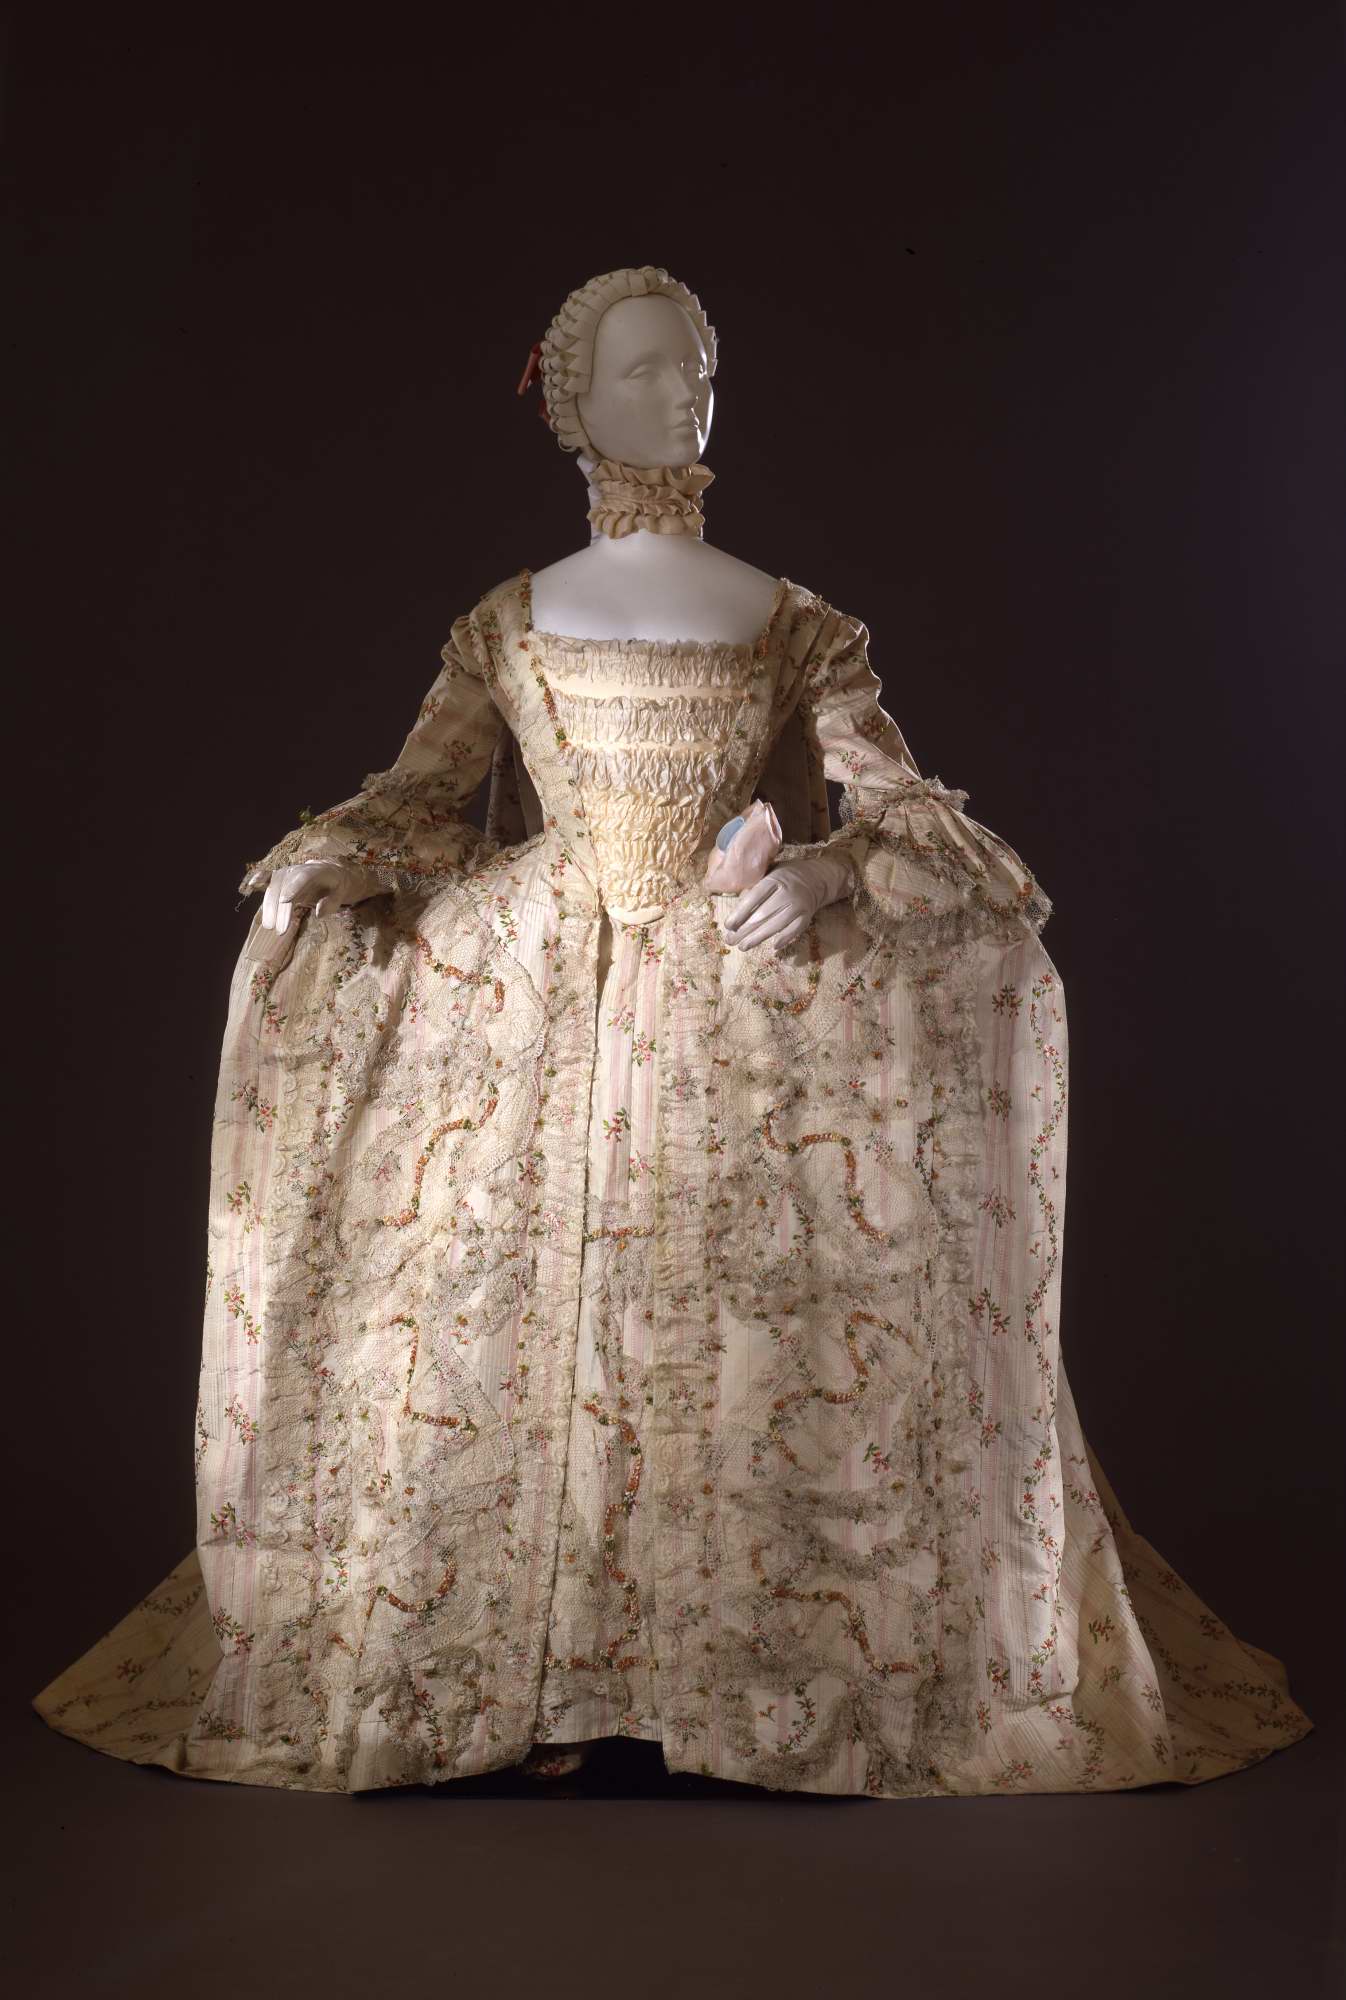 Elizabethan era | Historical dresses, Gowns, Bridal gowns